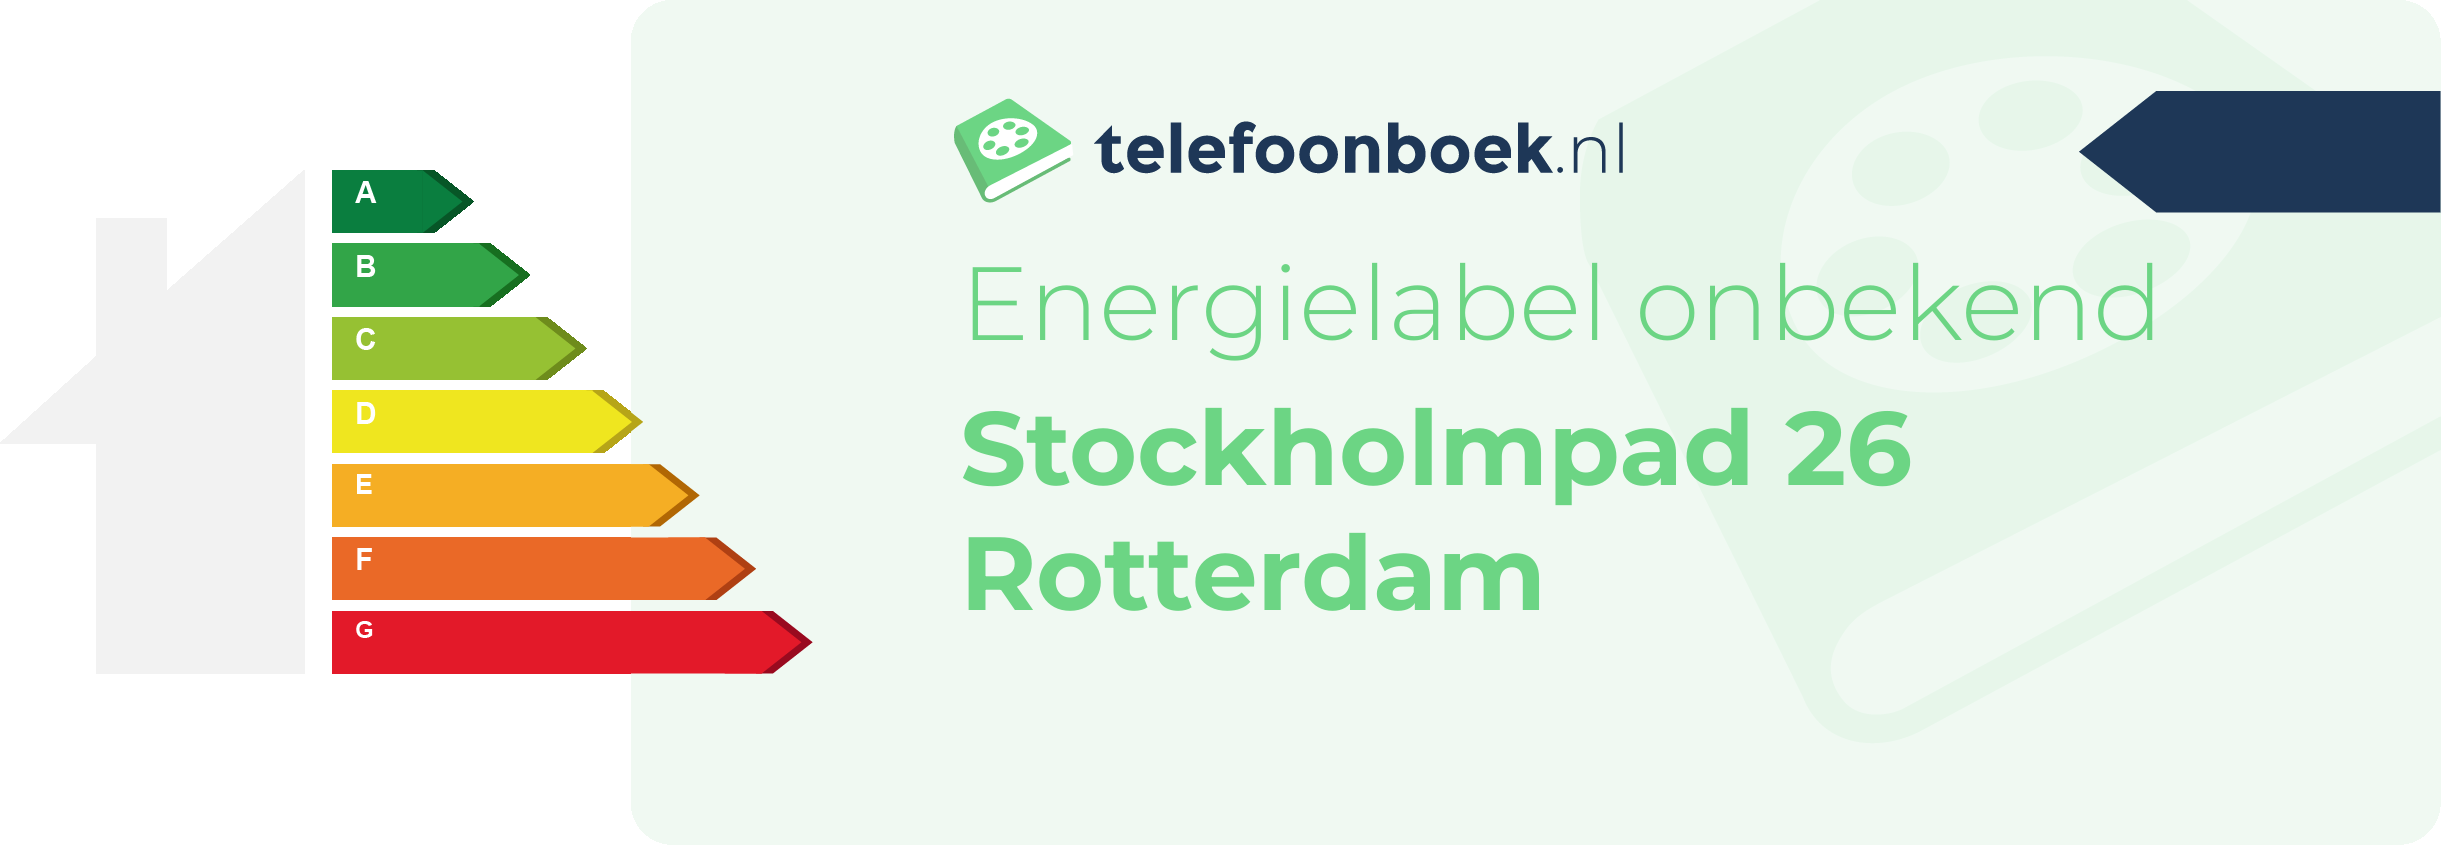 Energielabel Stockholmpad 26 Rotterdam